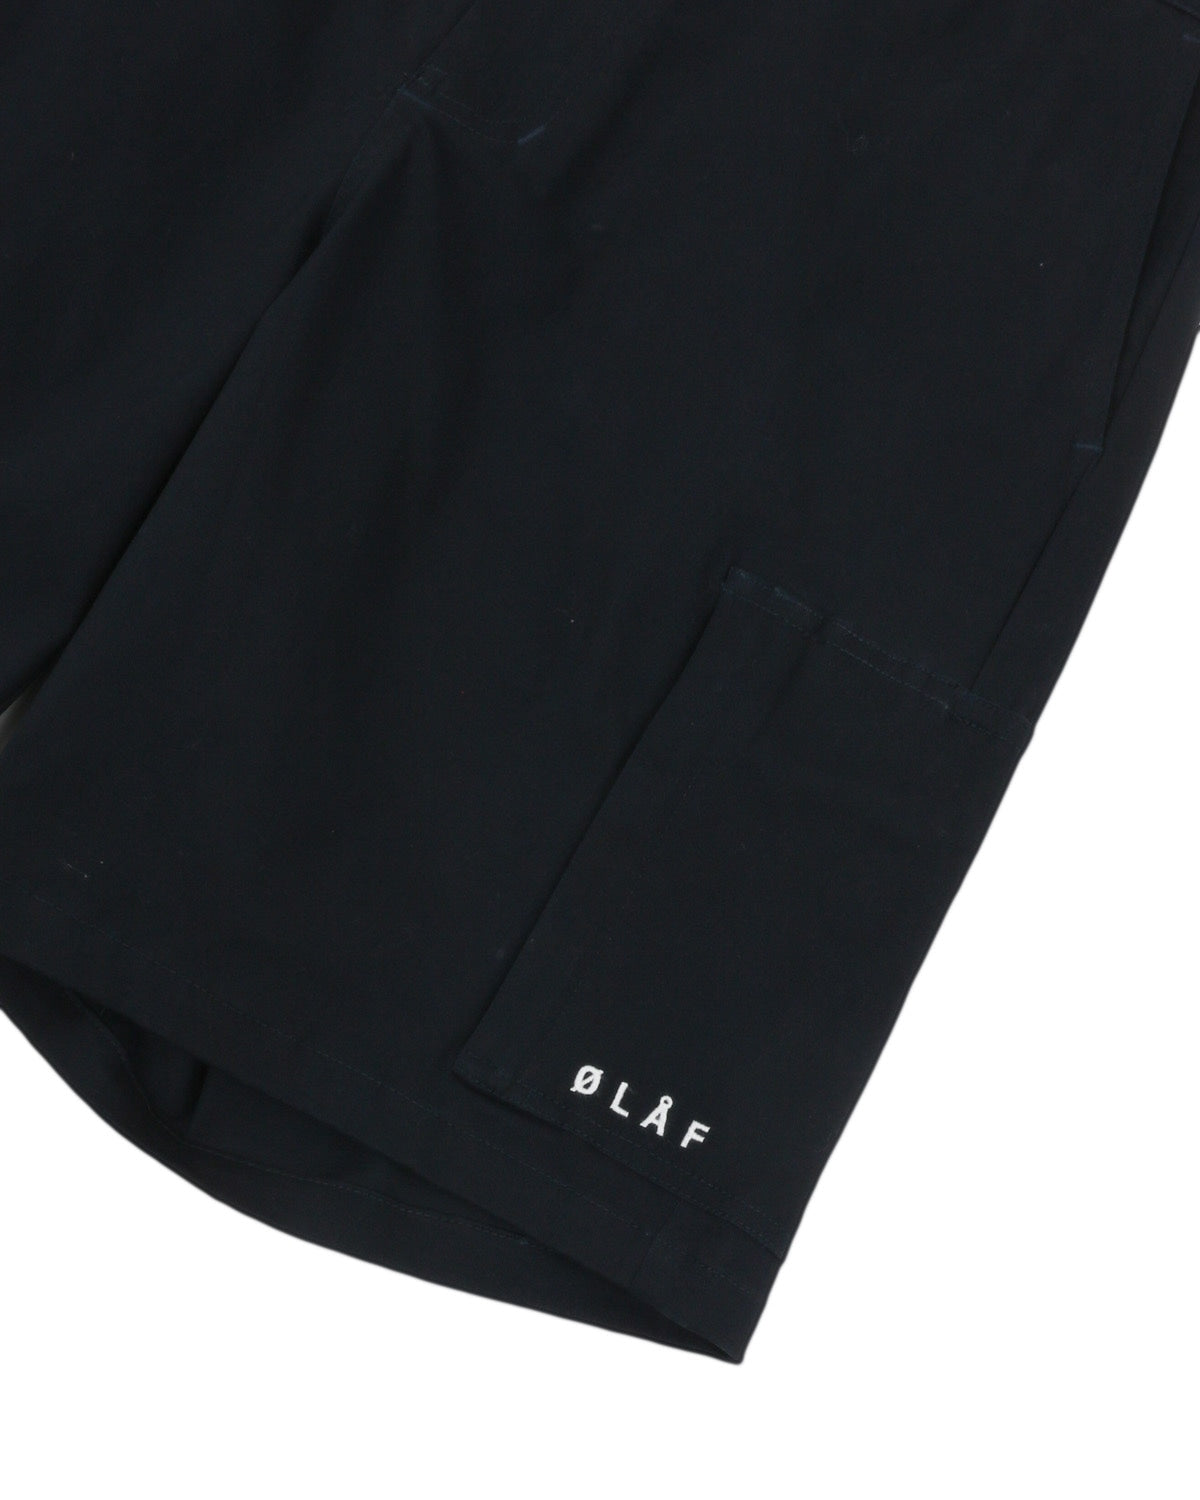 olaf_olaf zip pocket shorts_navy_3_3